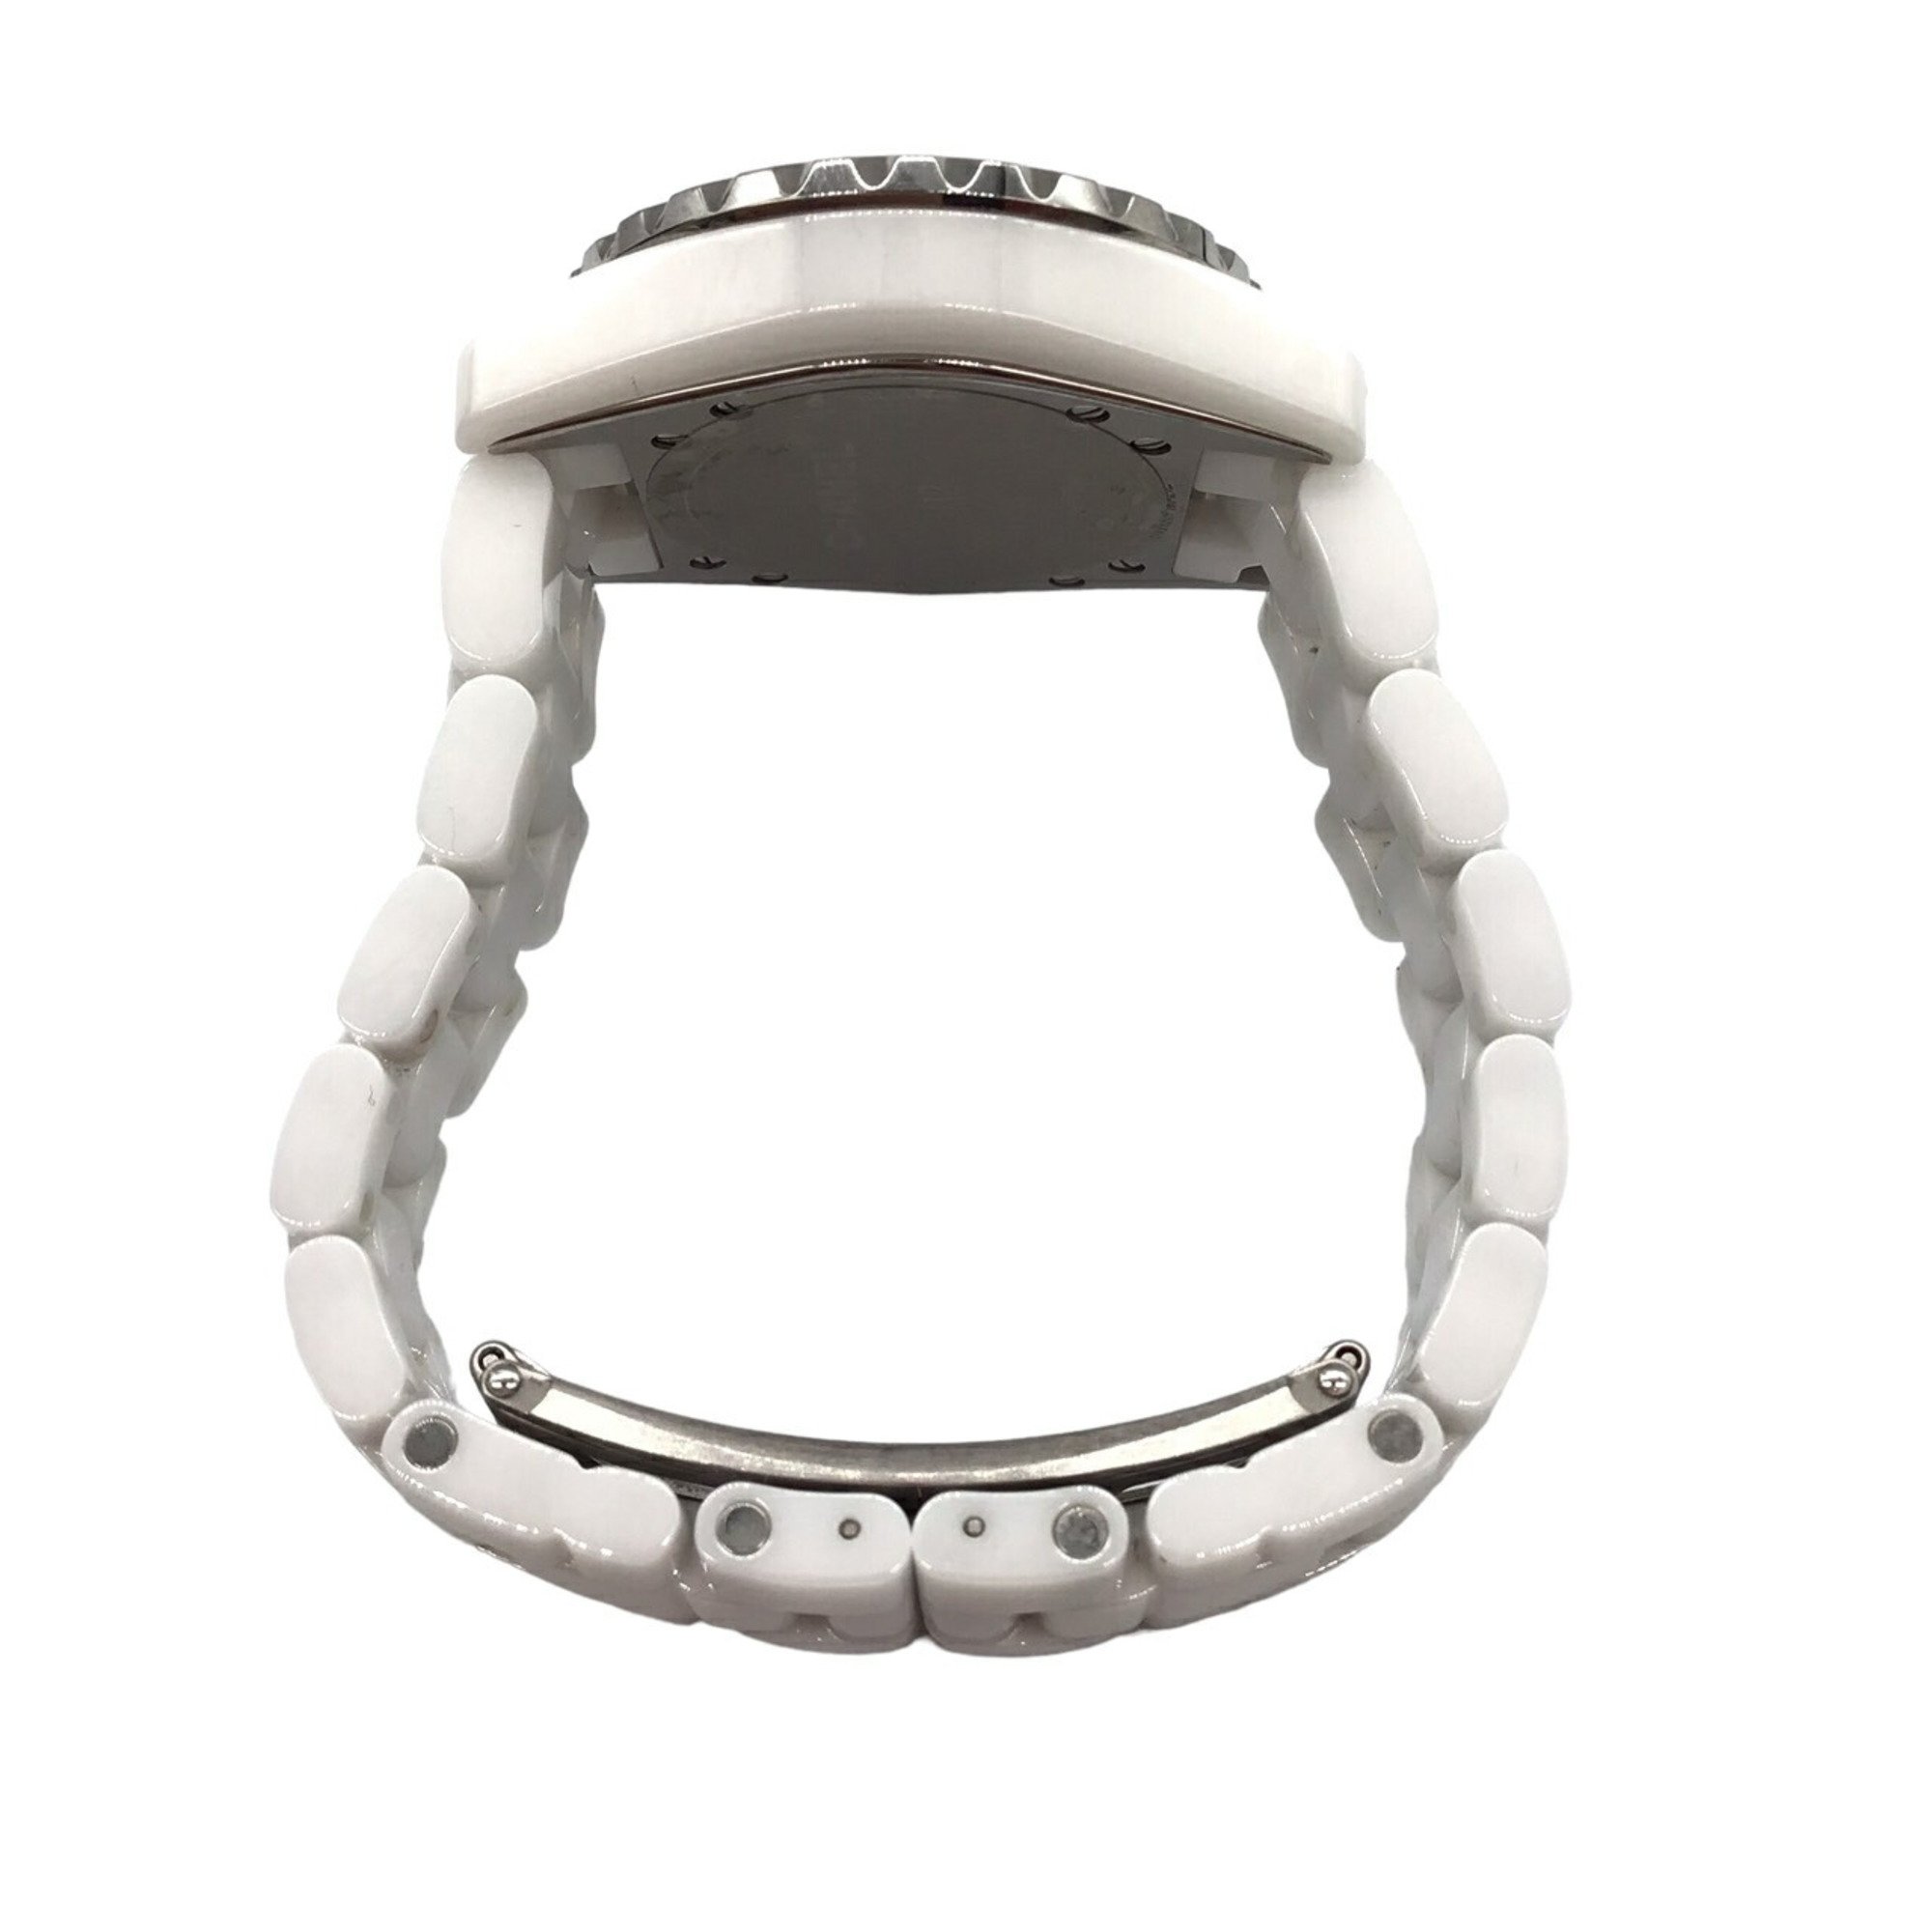 CHANEL J12 H1628 White Ceramic Diamond Index Date Change Quartz Battery Operated 33mm Wristwatch Watch Women's